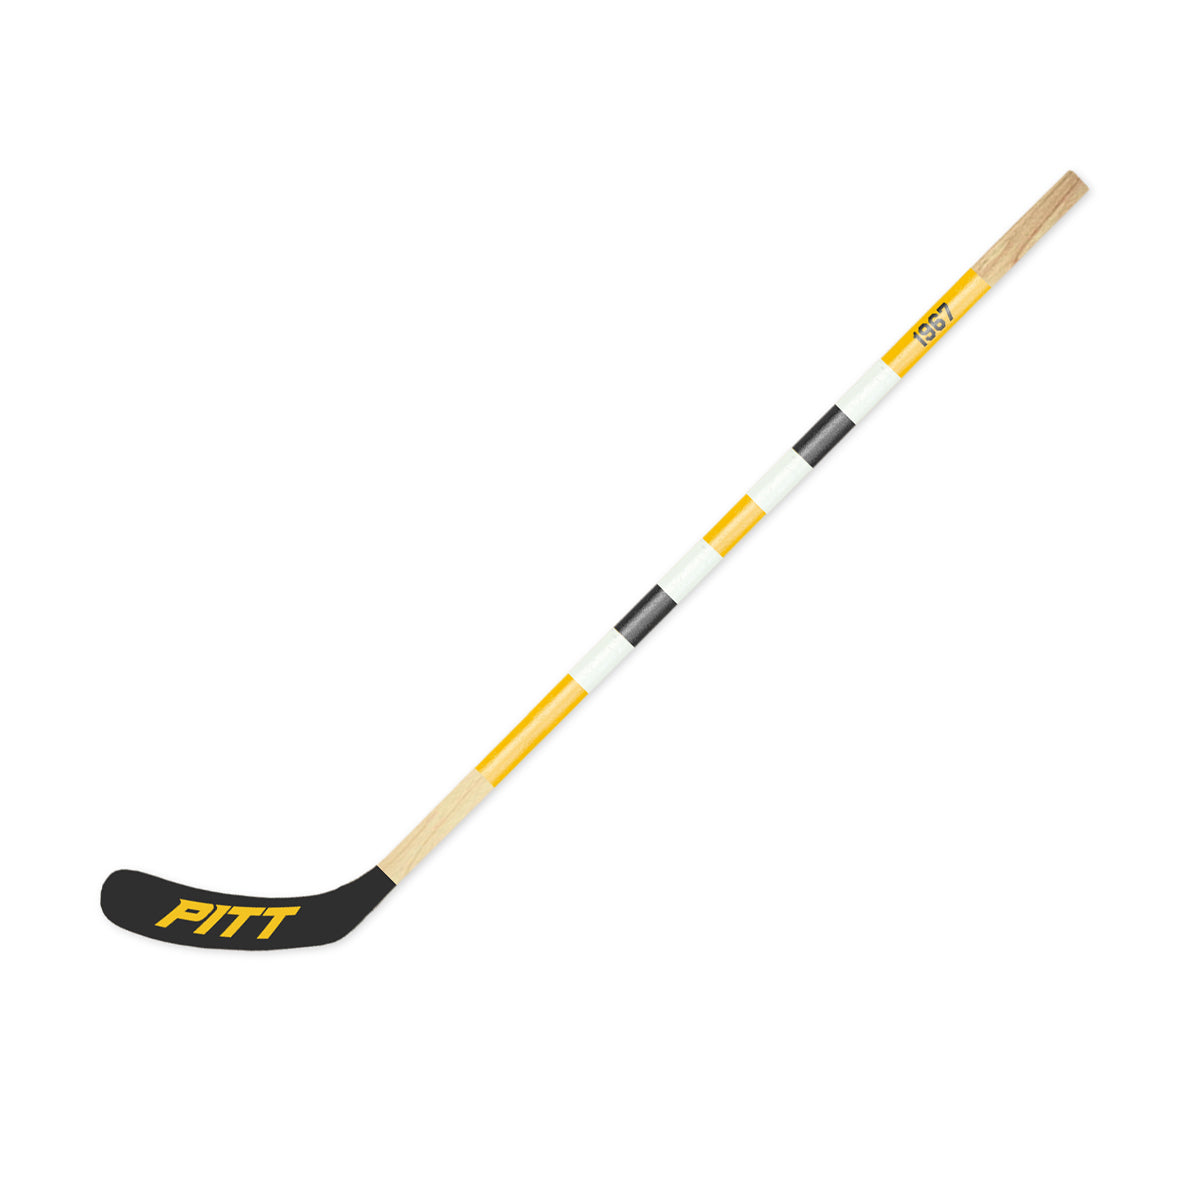 Pittsburgh Mitchell Hockey Stick